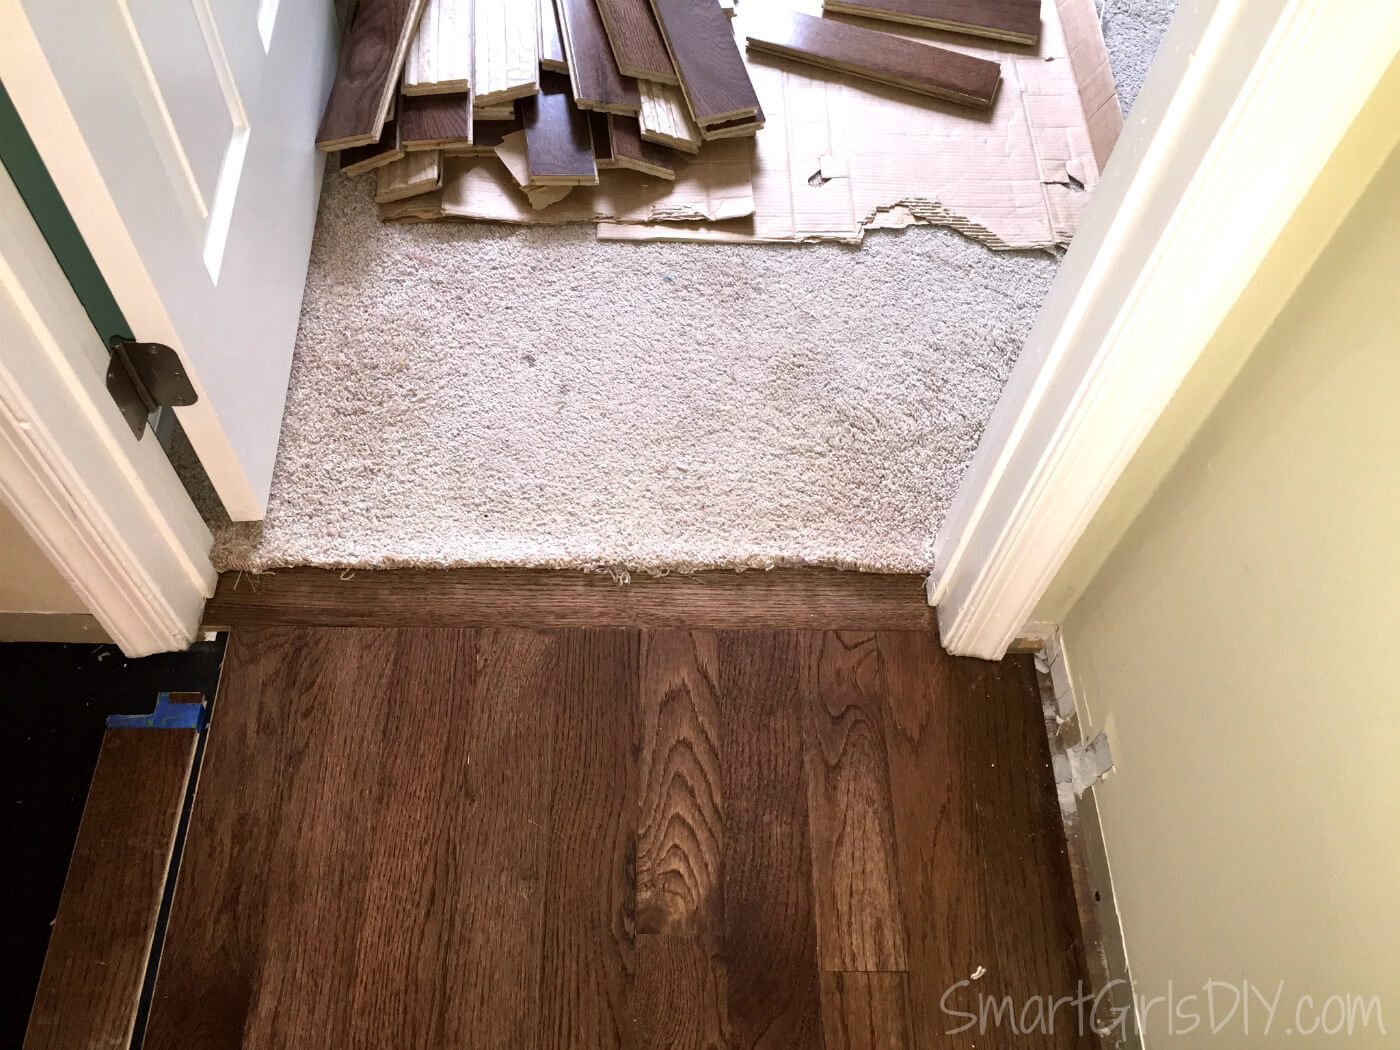 3 8 engineered hardwood flooring stapler of upstairs hallway 1 installing hardwood floors with transition between carpet and hardwood floor